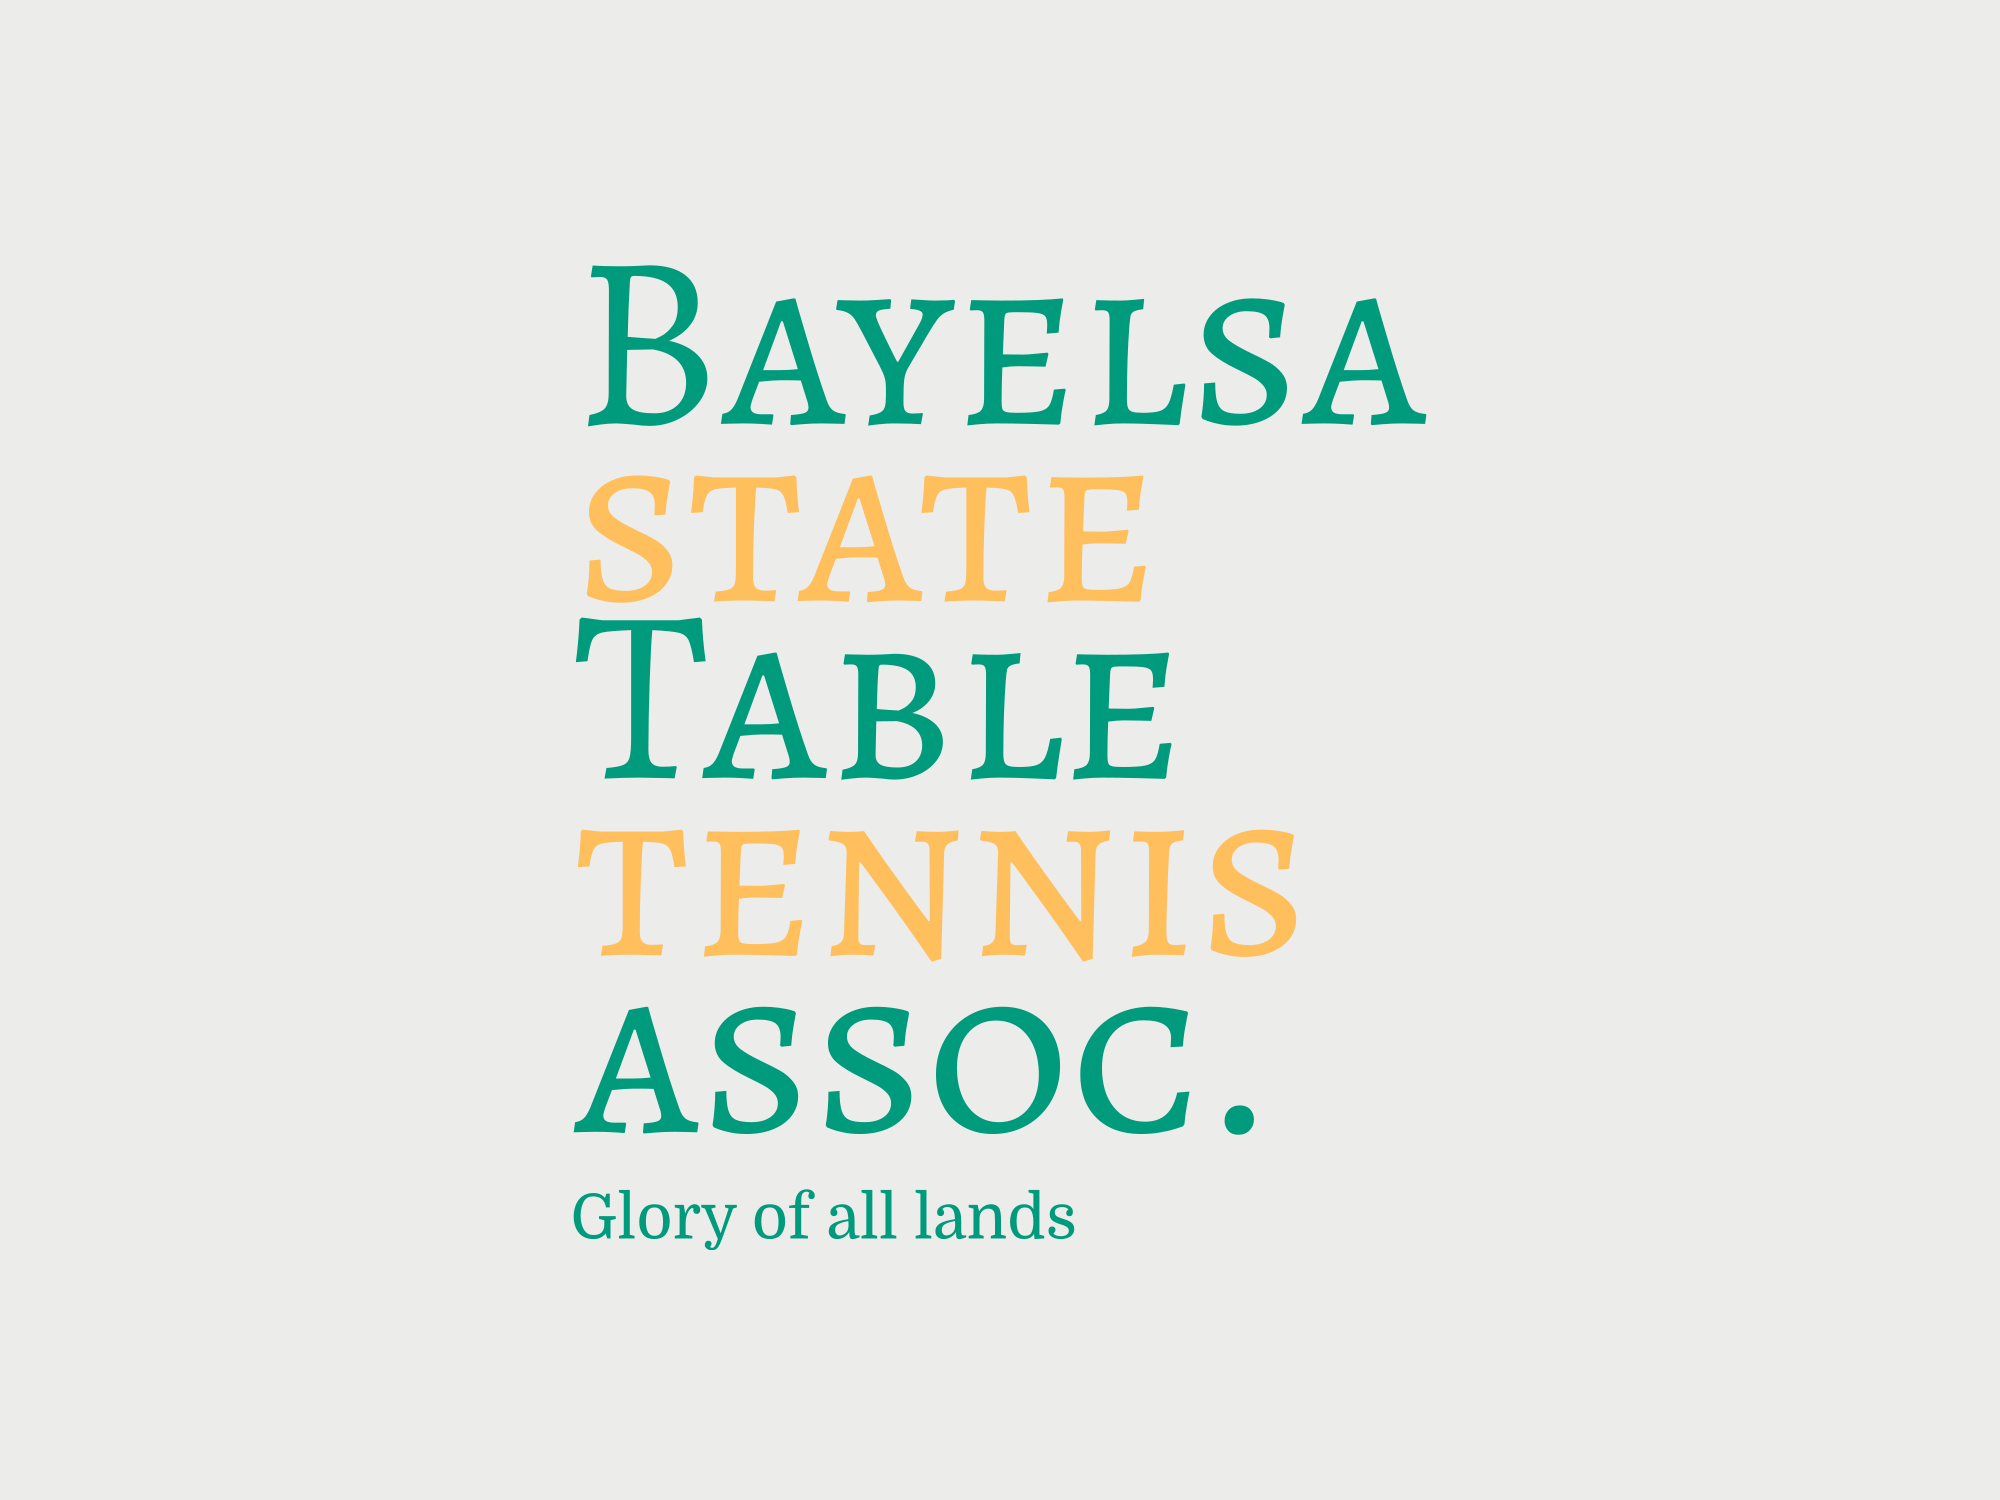 Bayelsa state Table Tennis assoc.